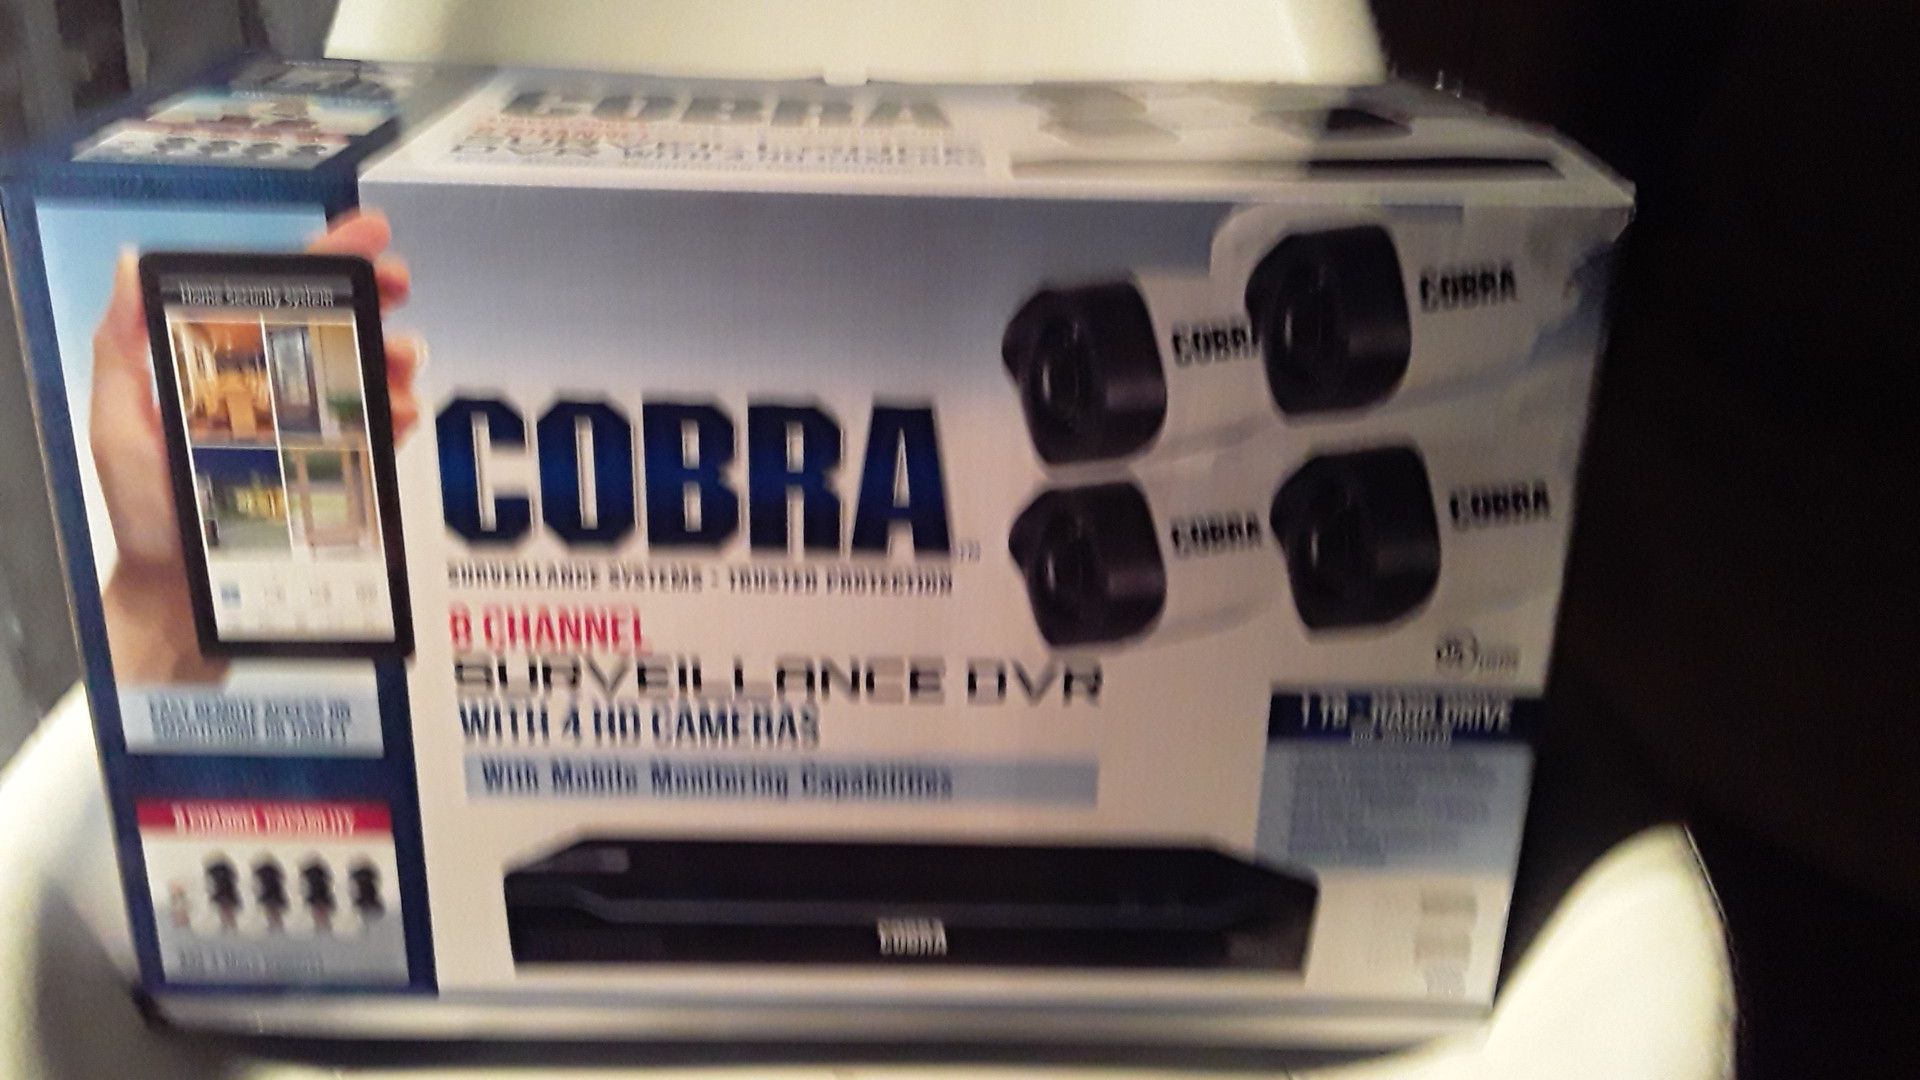 Cobra 8 channel surveilance DVR with 4 cameras brand new